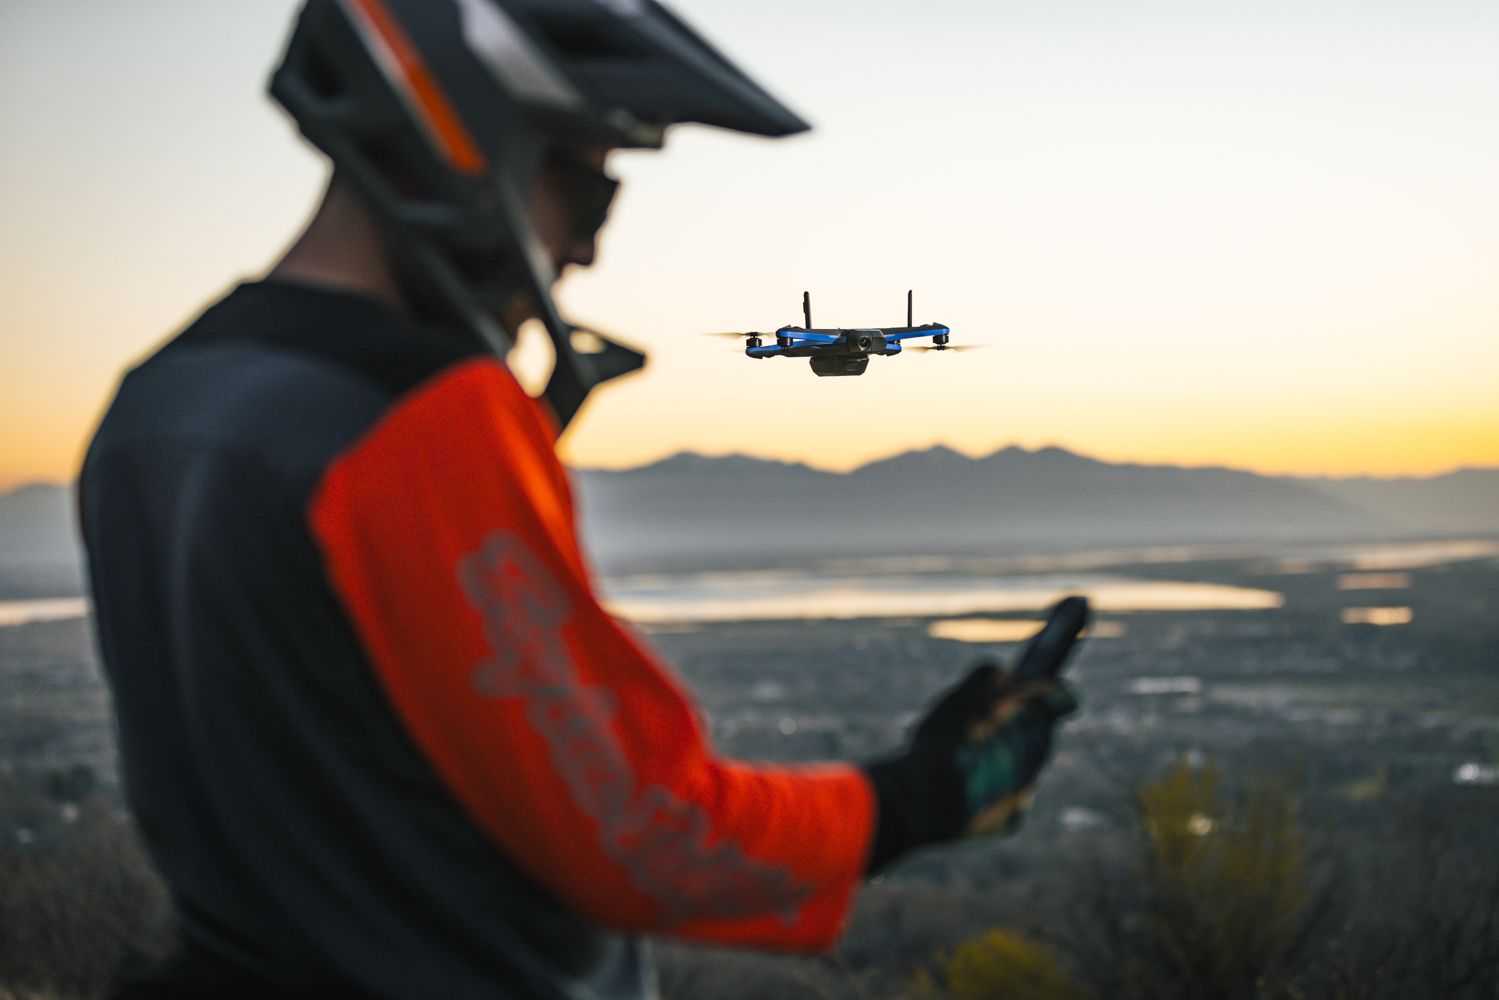 skydio follow me drone for mountain biking